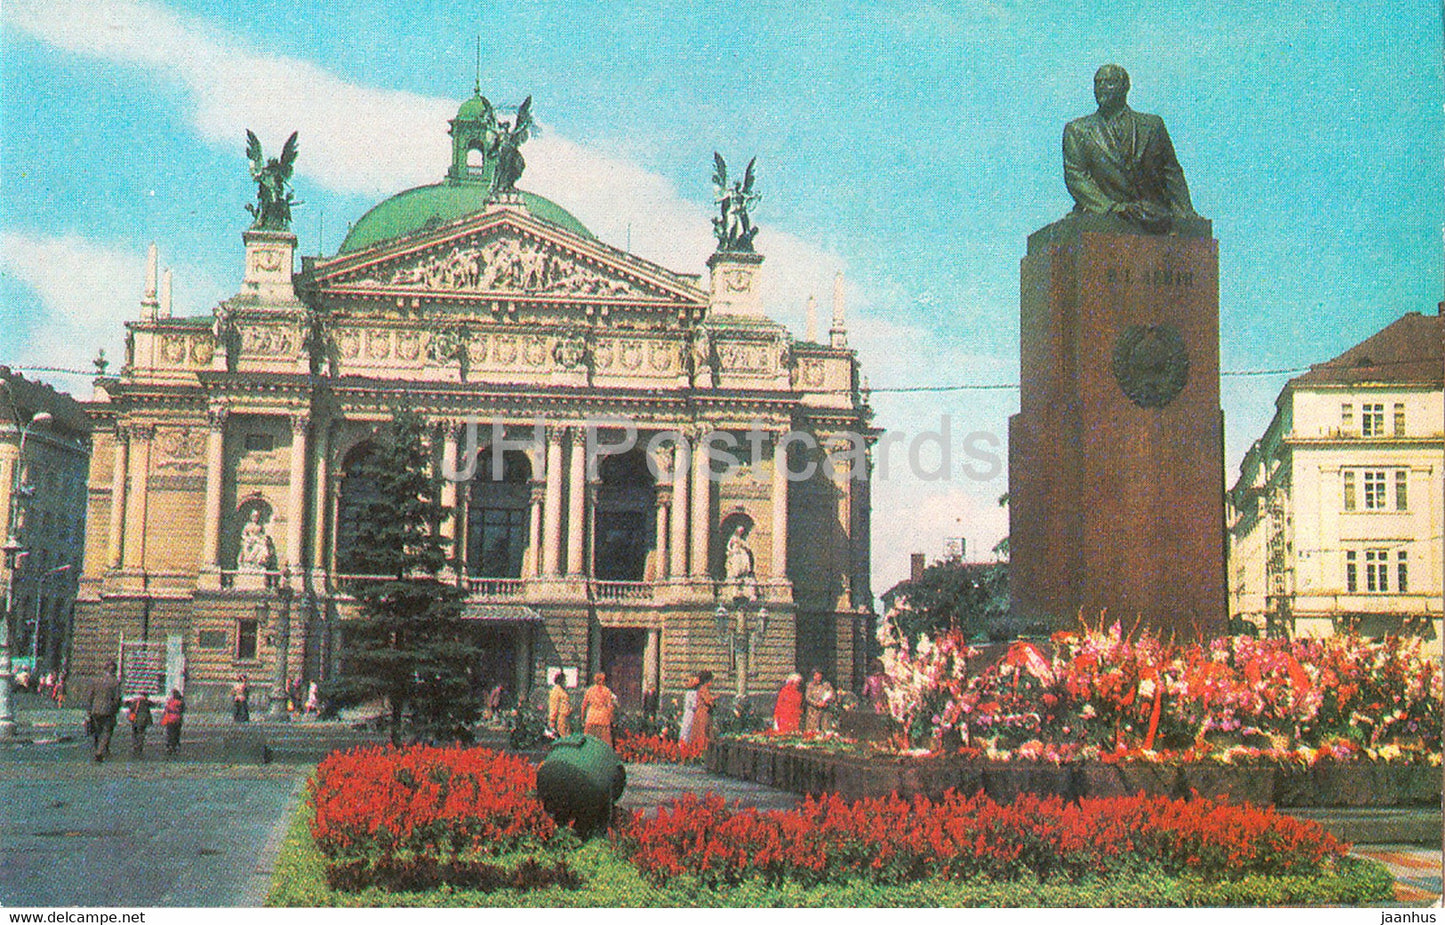 Lviv - Lvov - monument to Lenin - I. Franko State Drama Opera and Ballet Theatre - 1980 - Ukraine USSR - unused - JH Postcards